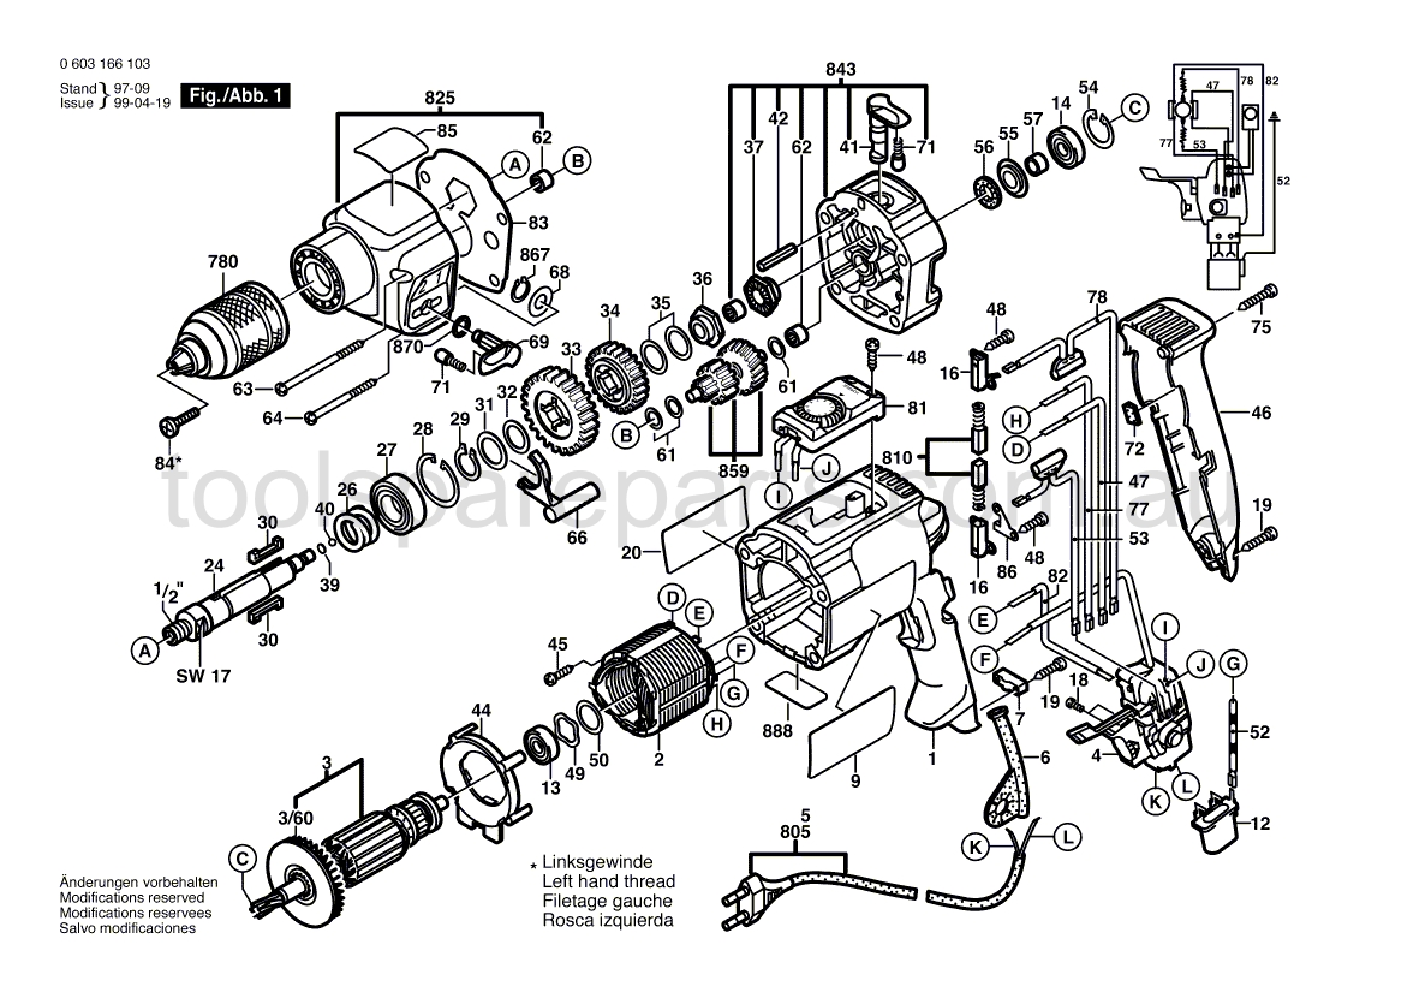 Bosch CSB 1000-2 RET 0603166137  Diagram 1